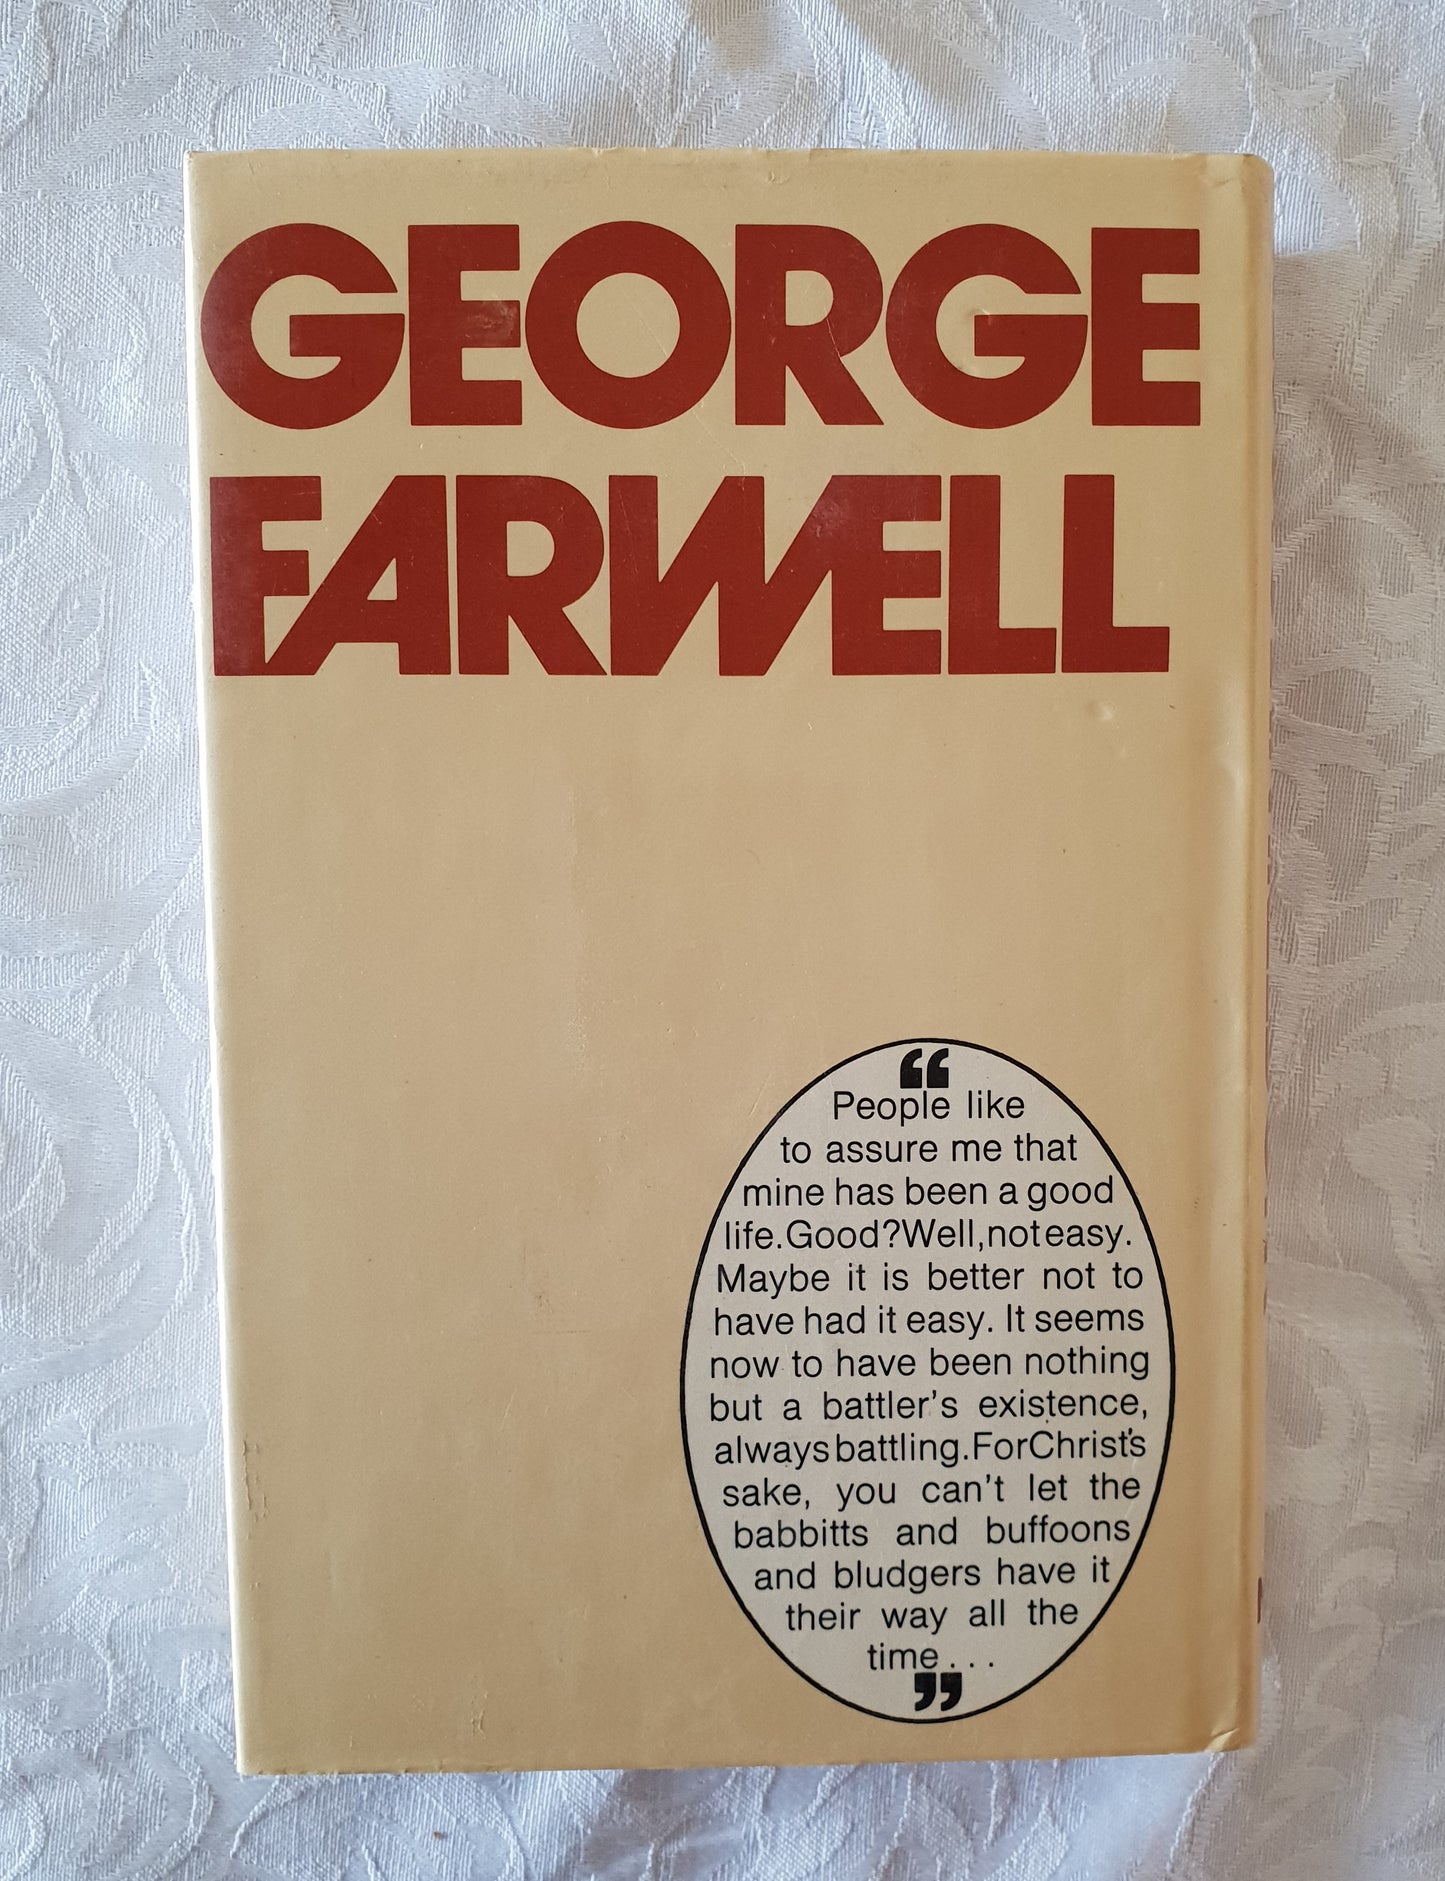 Rejoice In Freedom by George Farwell